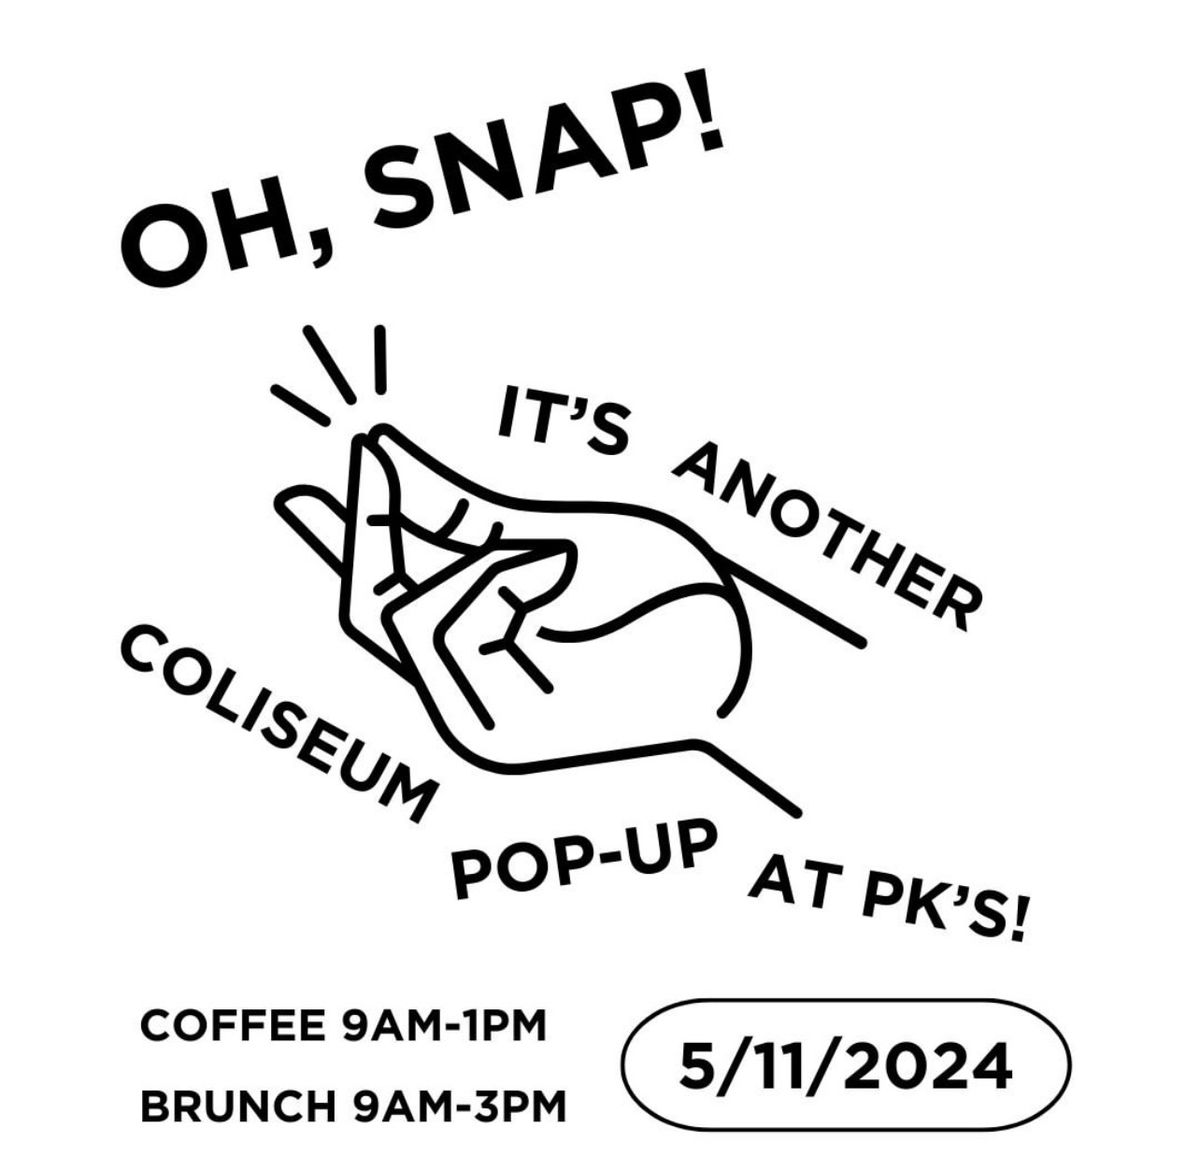 Coliseum Coffee Works pop-up at PK's! \u2022 Sat 5\/11 9am-1pm